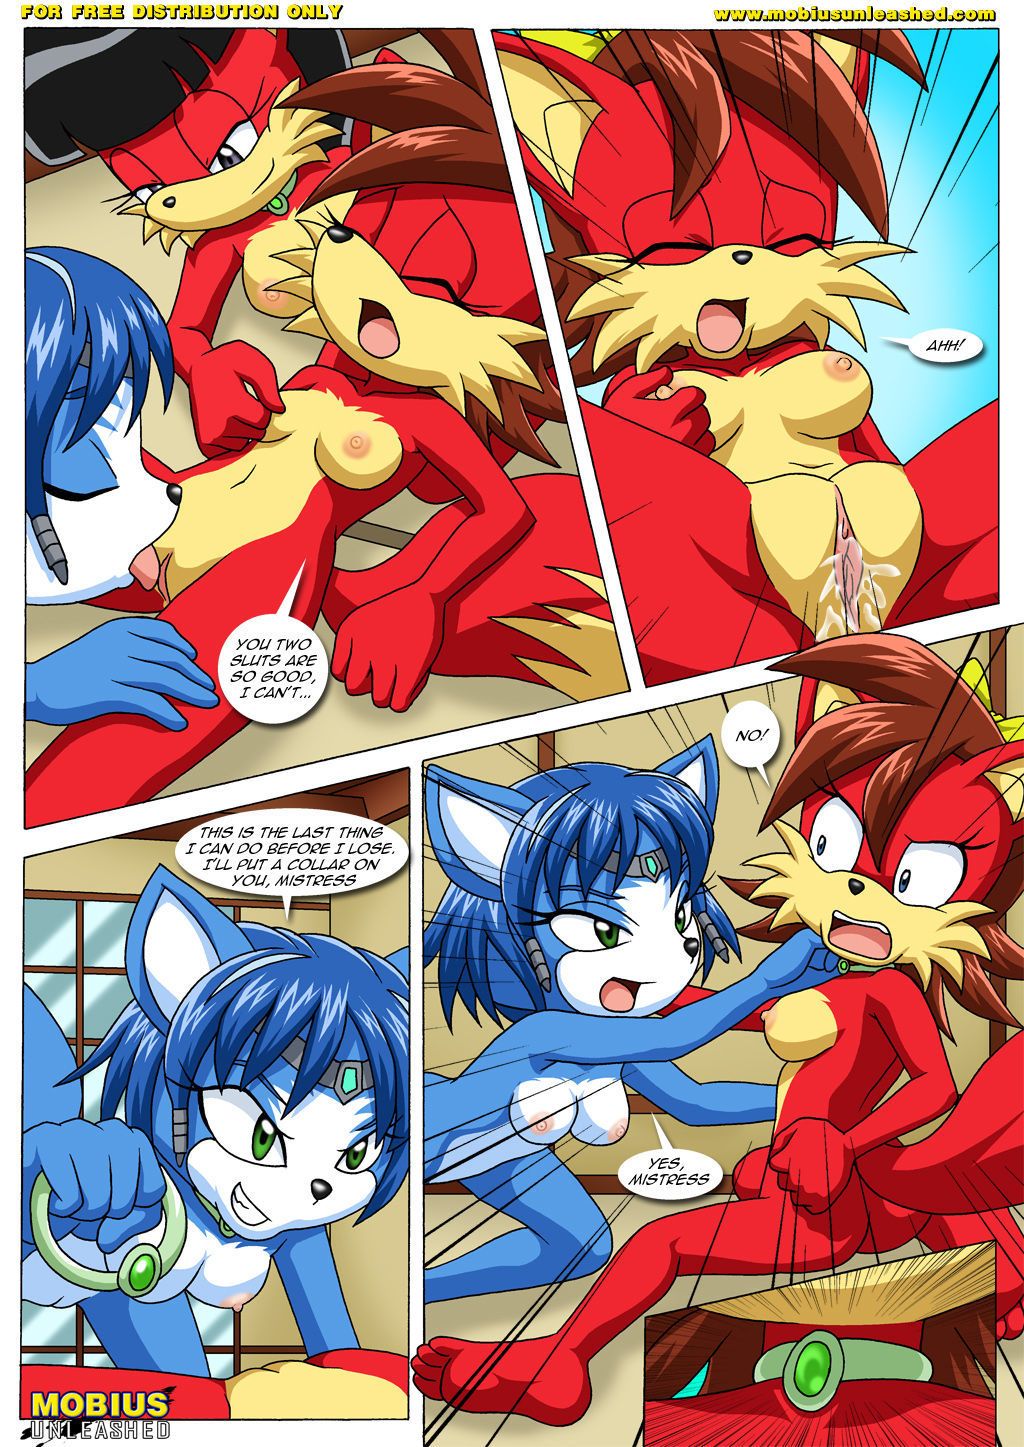 Palcomix FoXXXes (Sonic the Hedgehog- Star Fox)